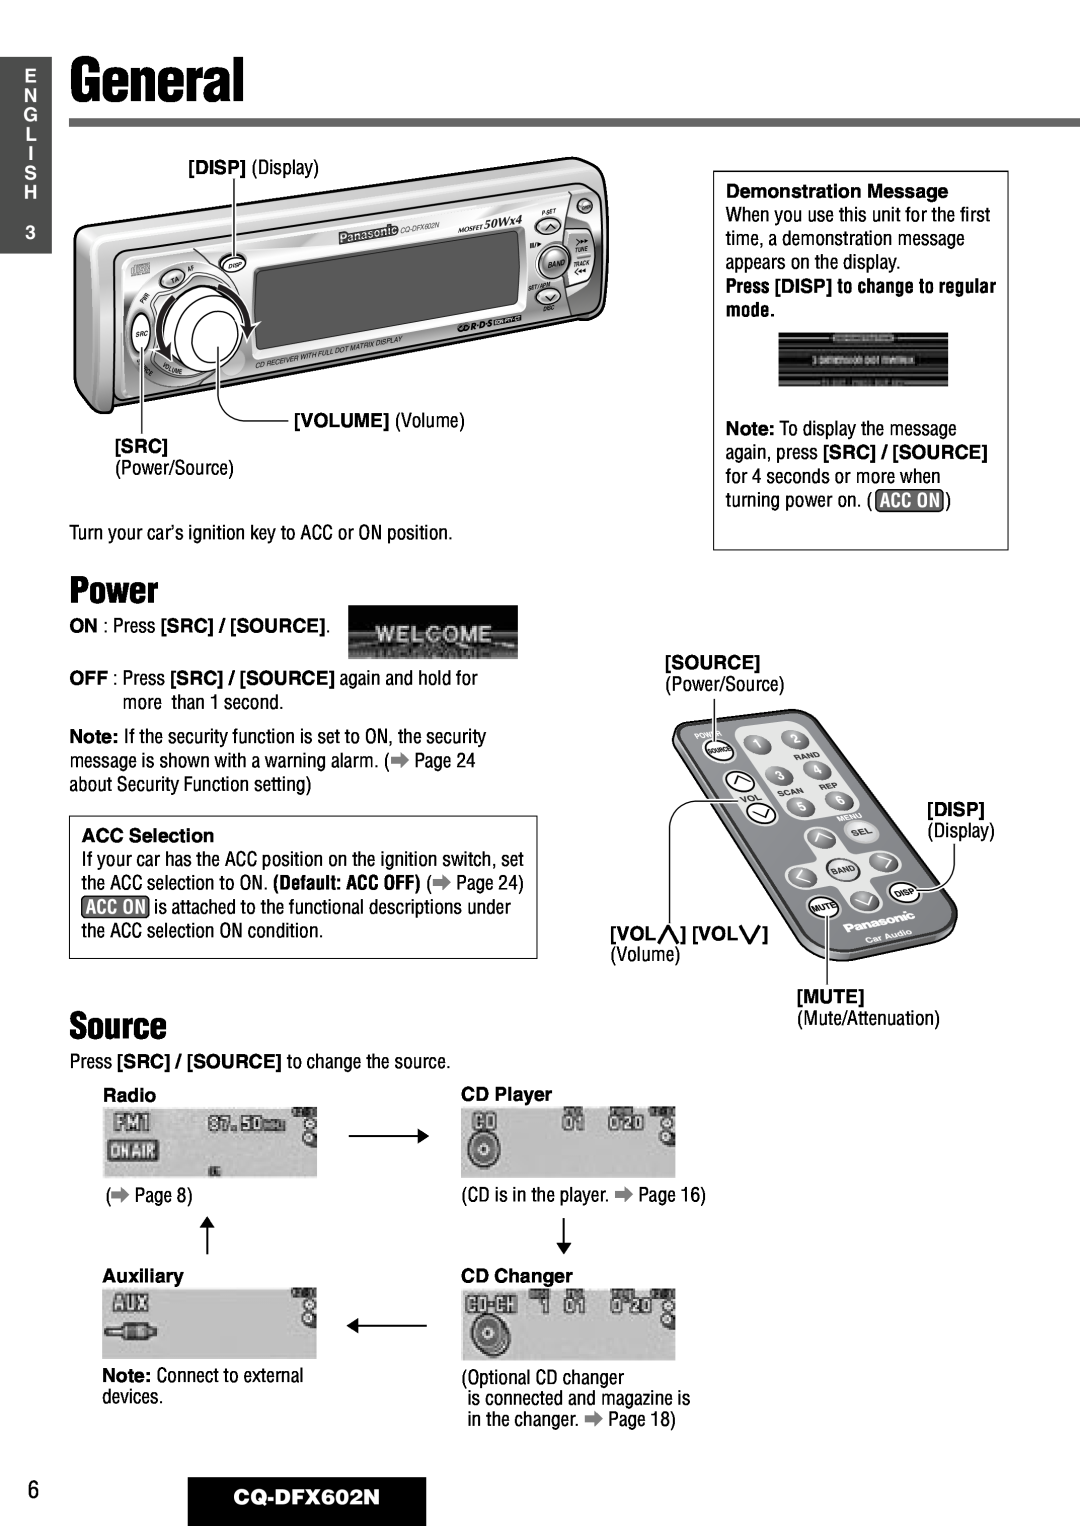 Panasonic manual General, Power, Source, 6CQ-DFX602N, E N G L I S H 